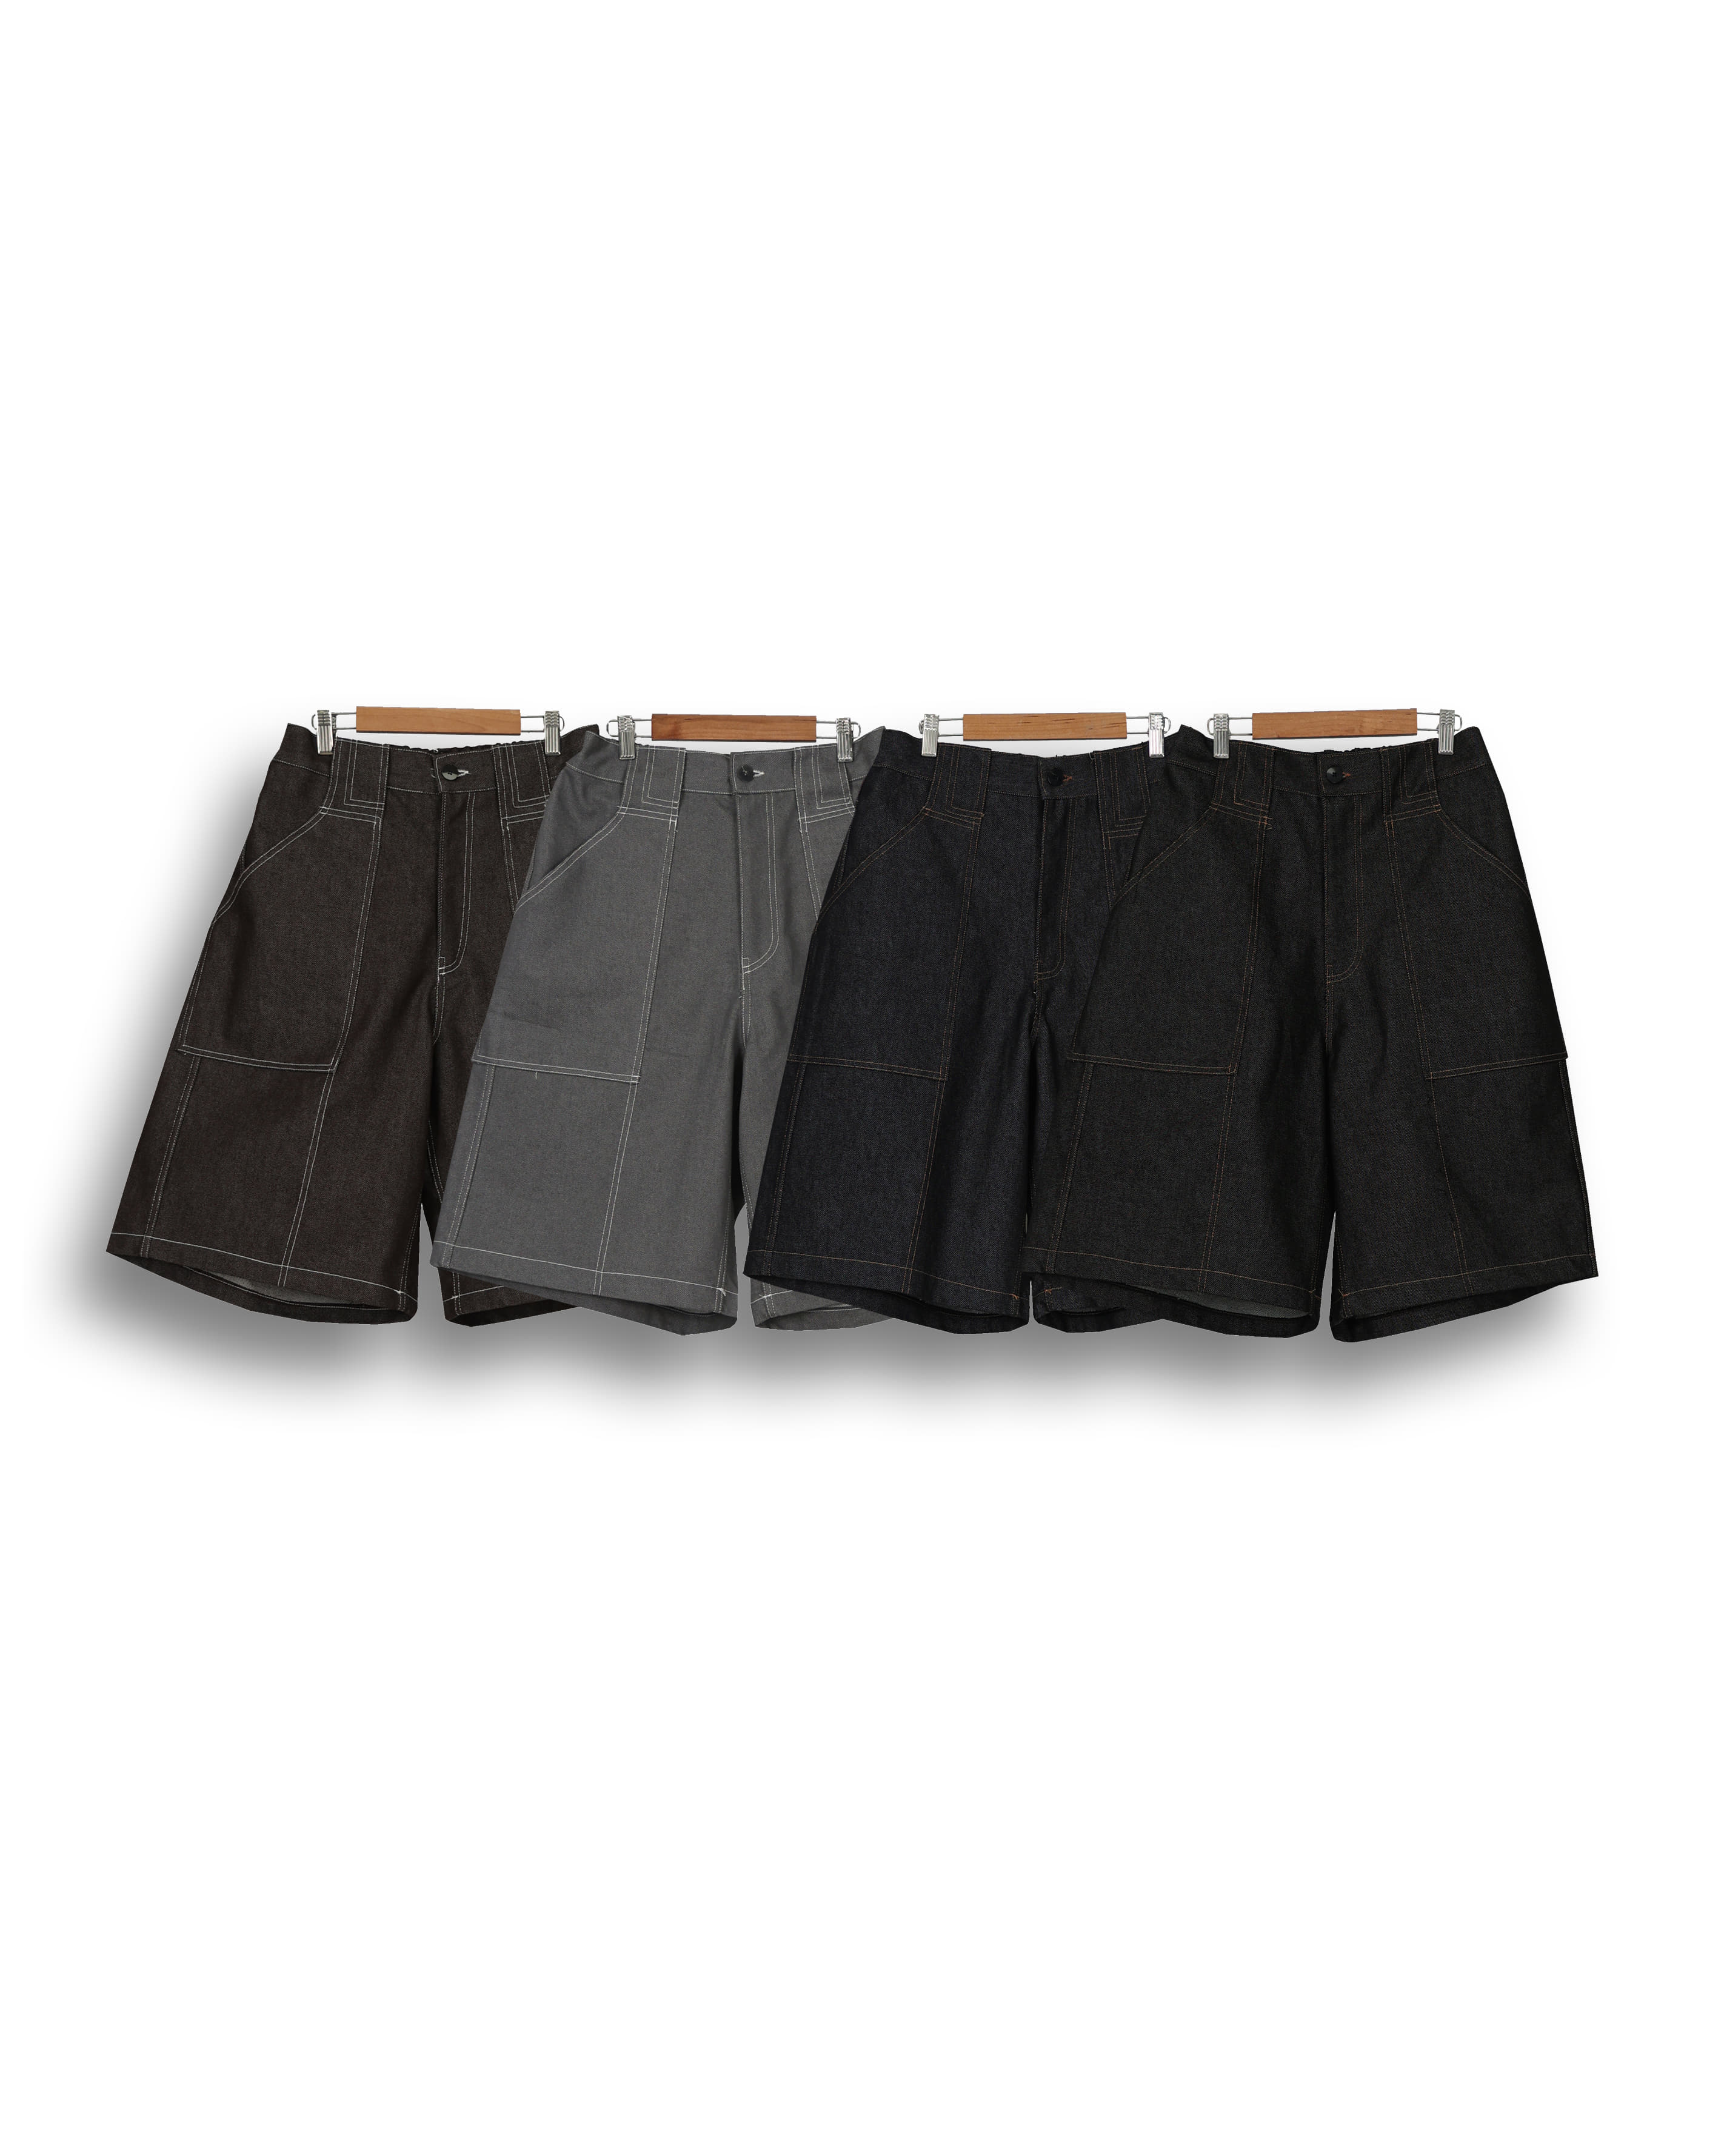 FREAK Stitch Line Bermuda Denim Pants (Black/Navy/Brown/Gray)